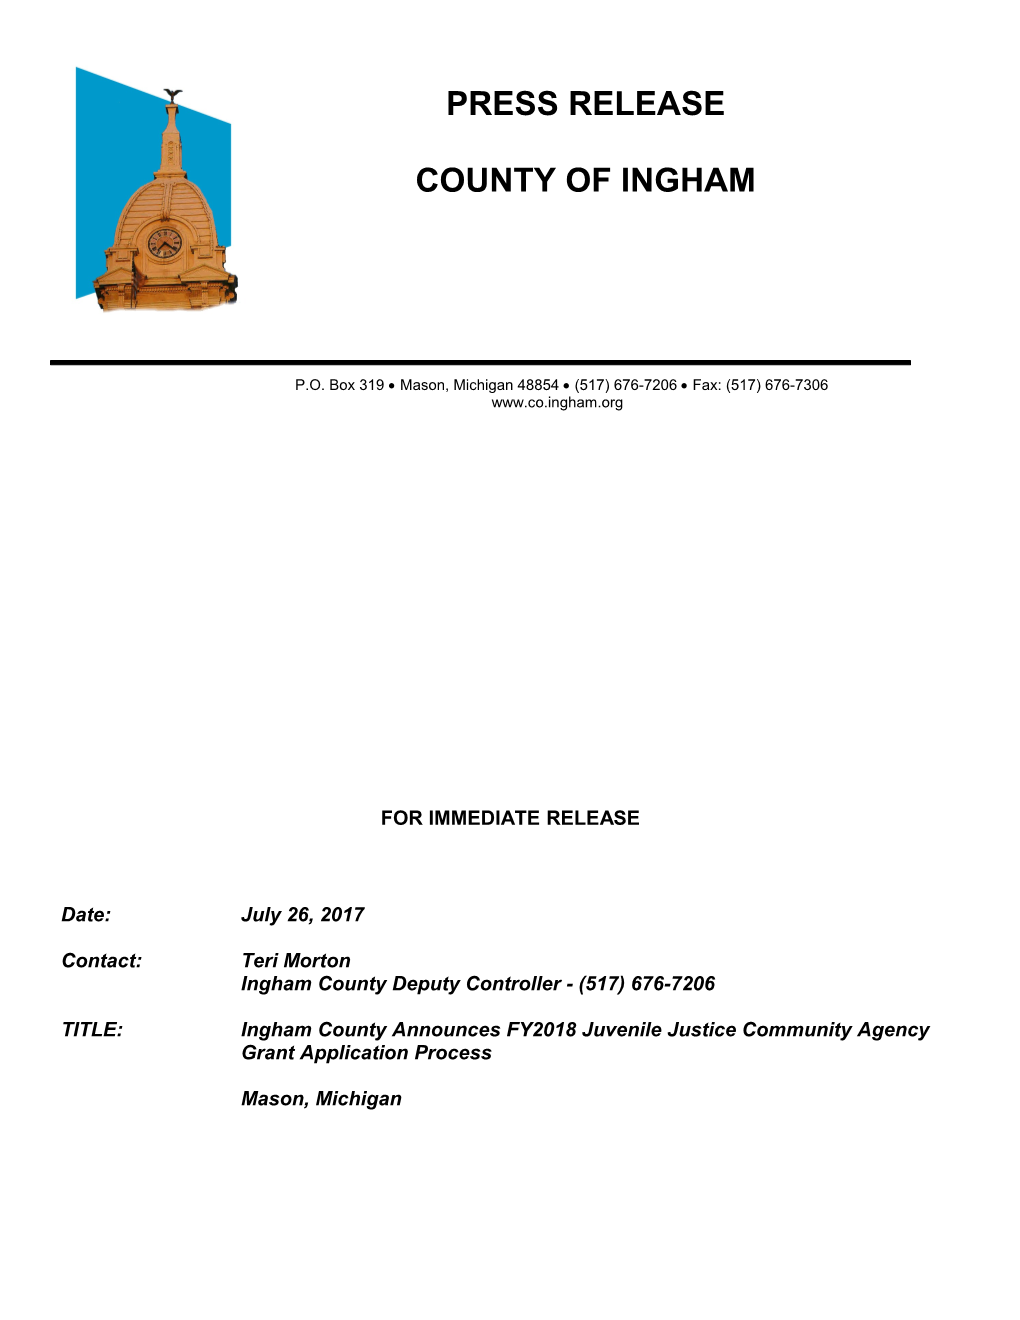 Ingham County Deputy Controller - (517) 676-7206